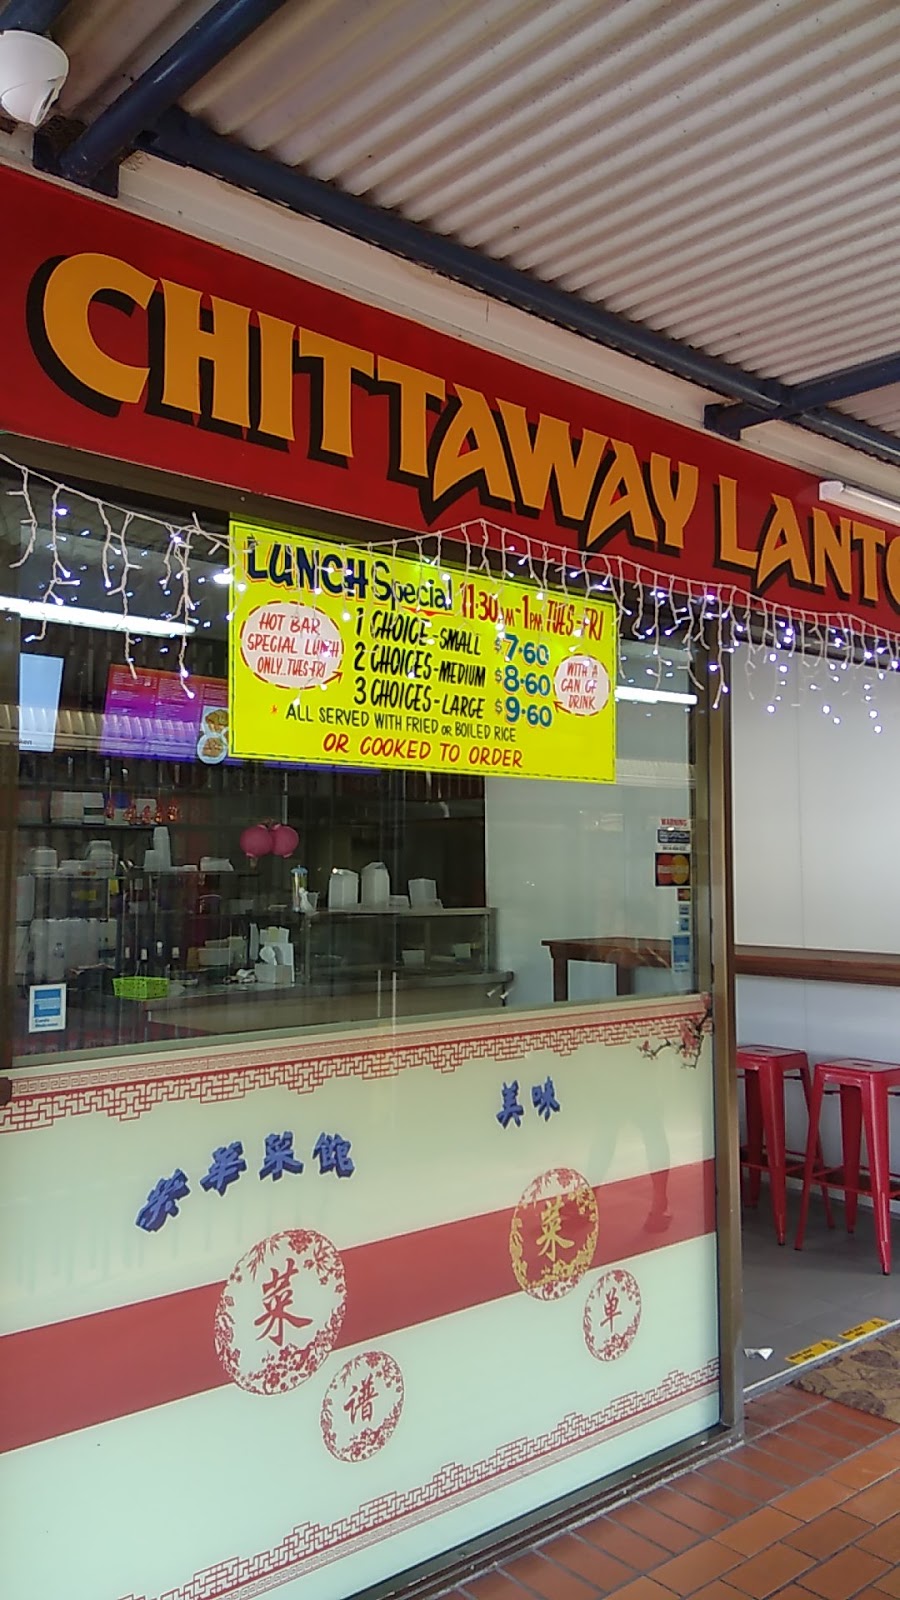 Chittaway Lantern | restaurant | 100 Chittaway Rd, Chittaway Bay NSW 2261, Australia | 0243885544 OR +61 2 4388 5544